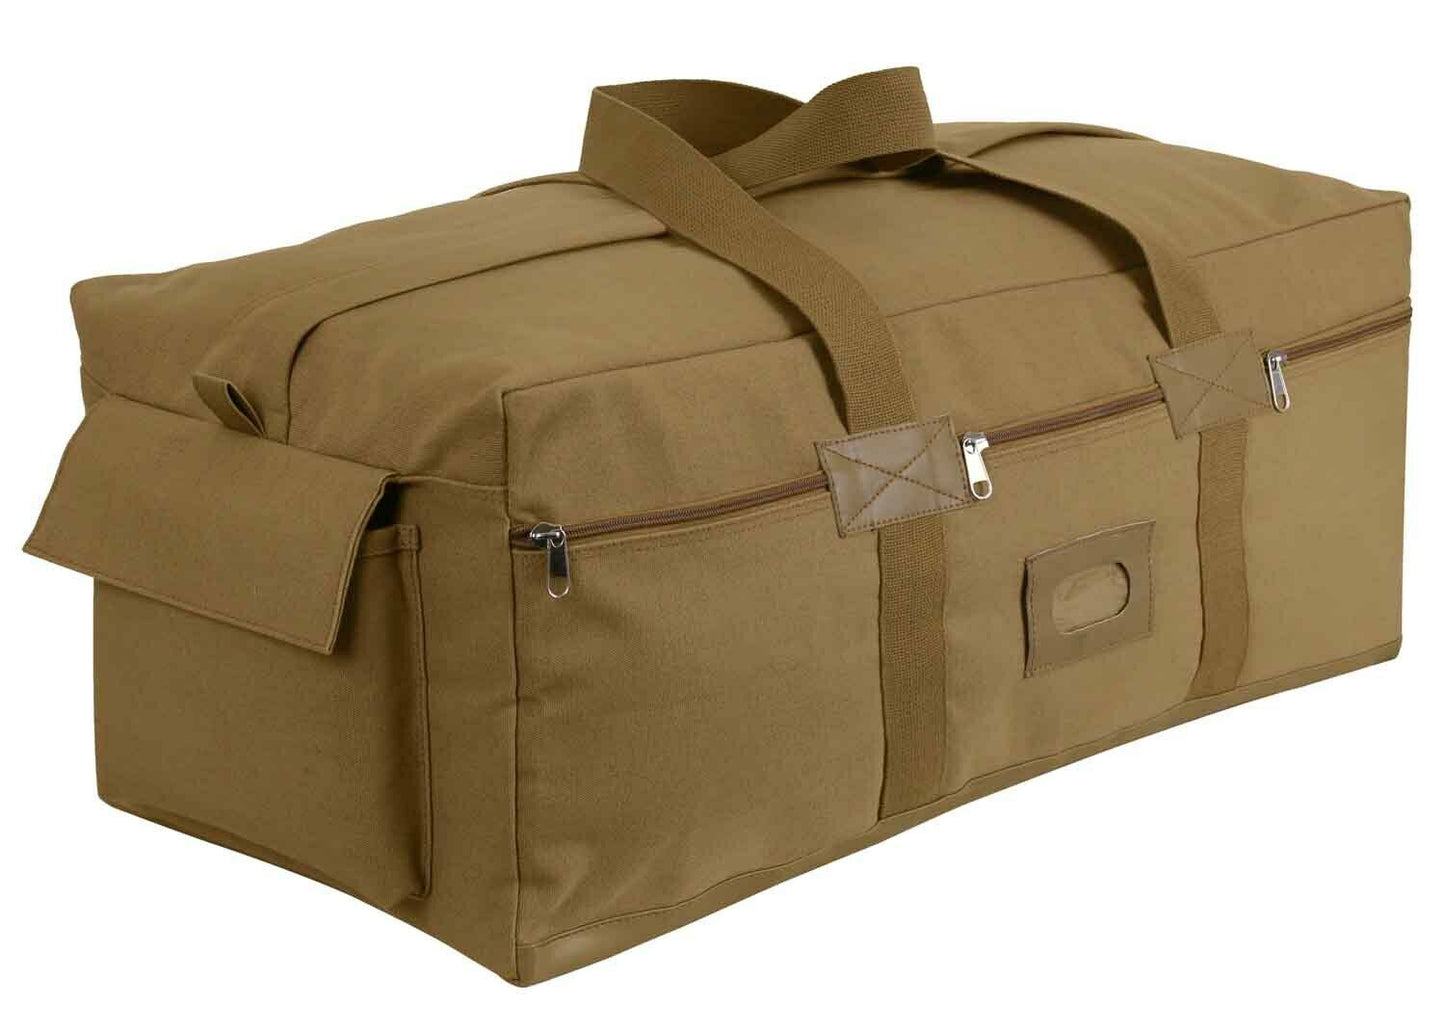 Rothco Canvas Israeli Type Duffle Bag